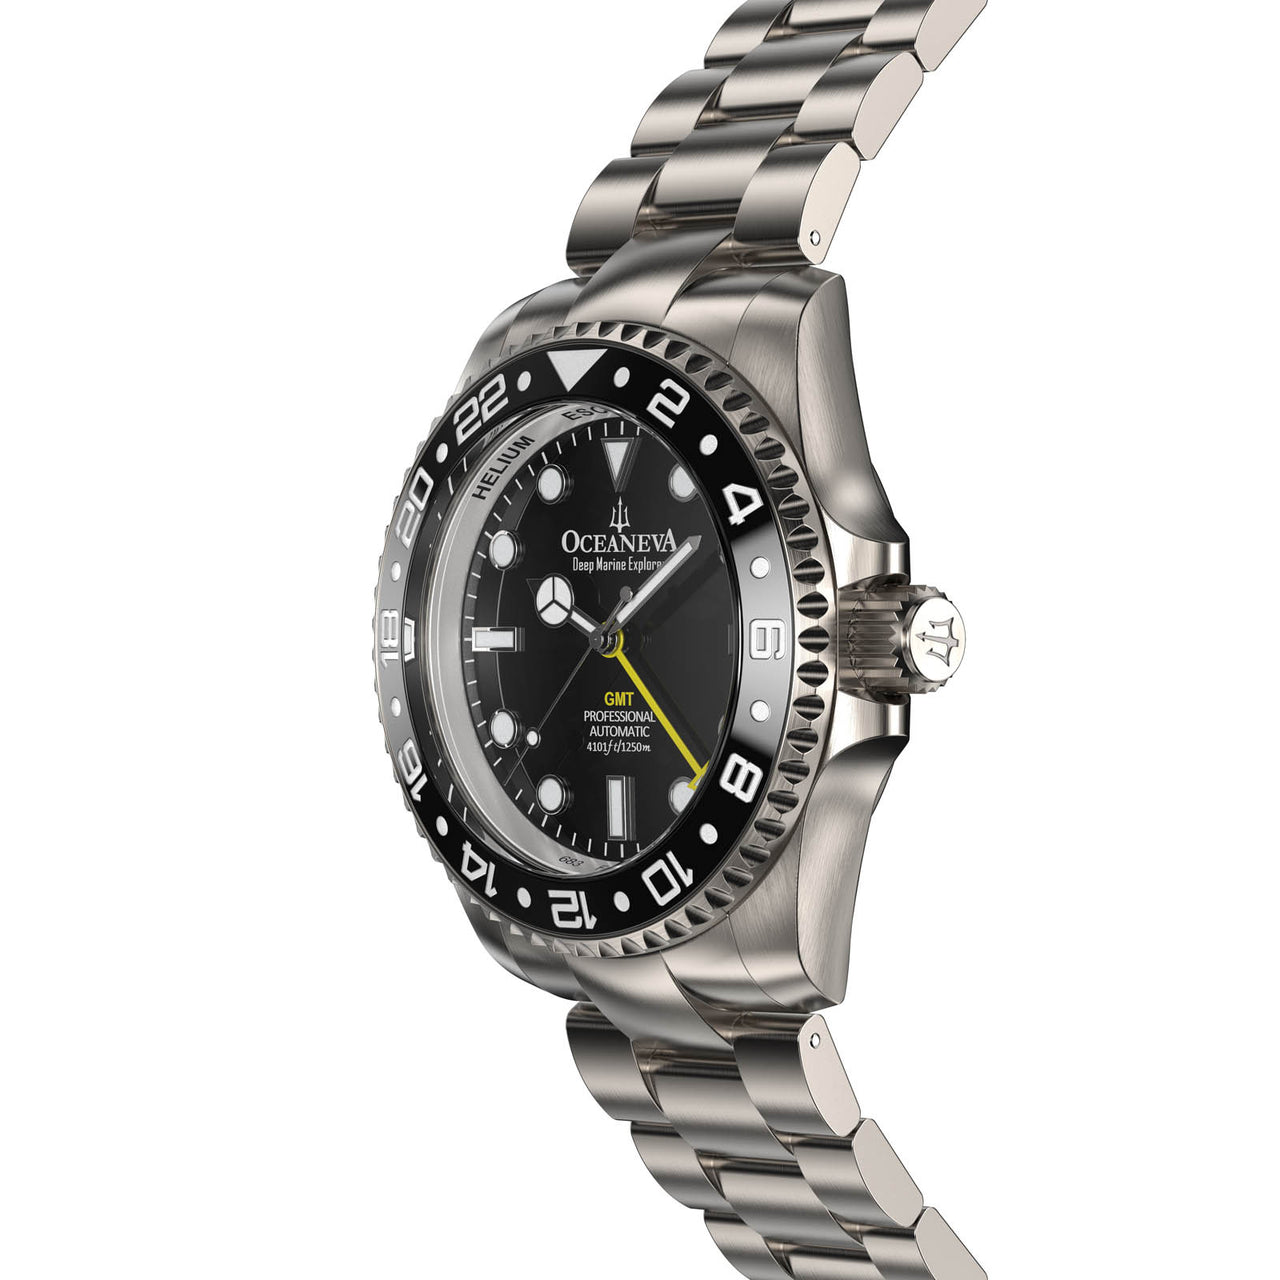 Durable Oceaneva Titanium GMT Watch equipped with Helium Escape Valve